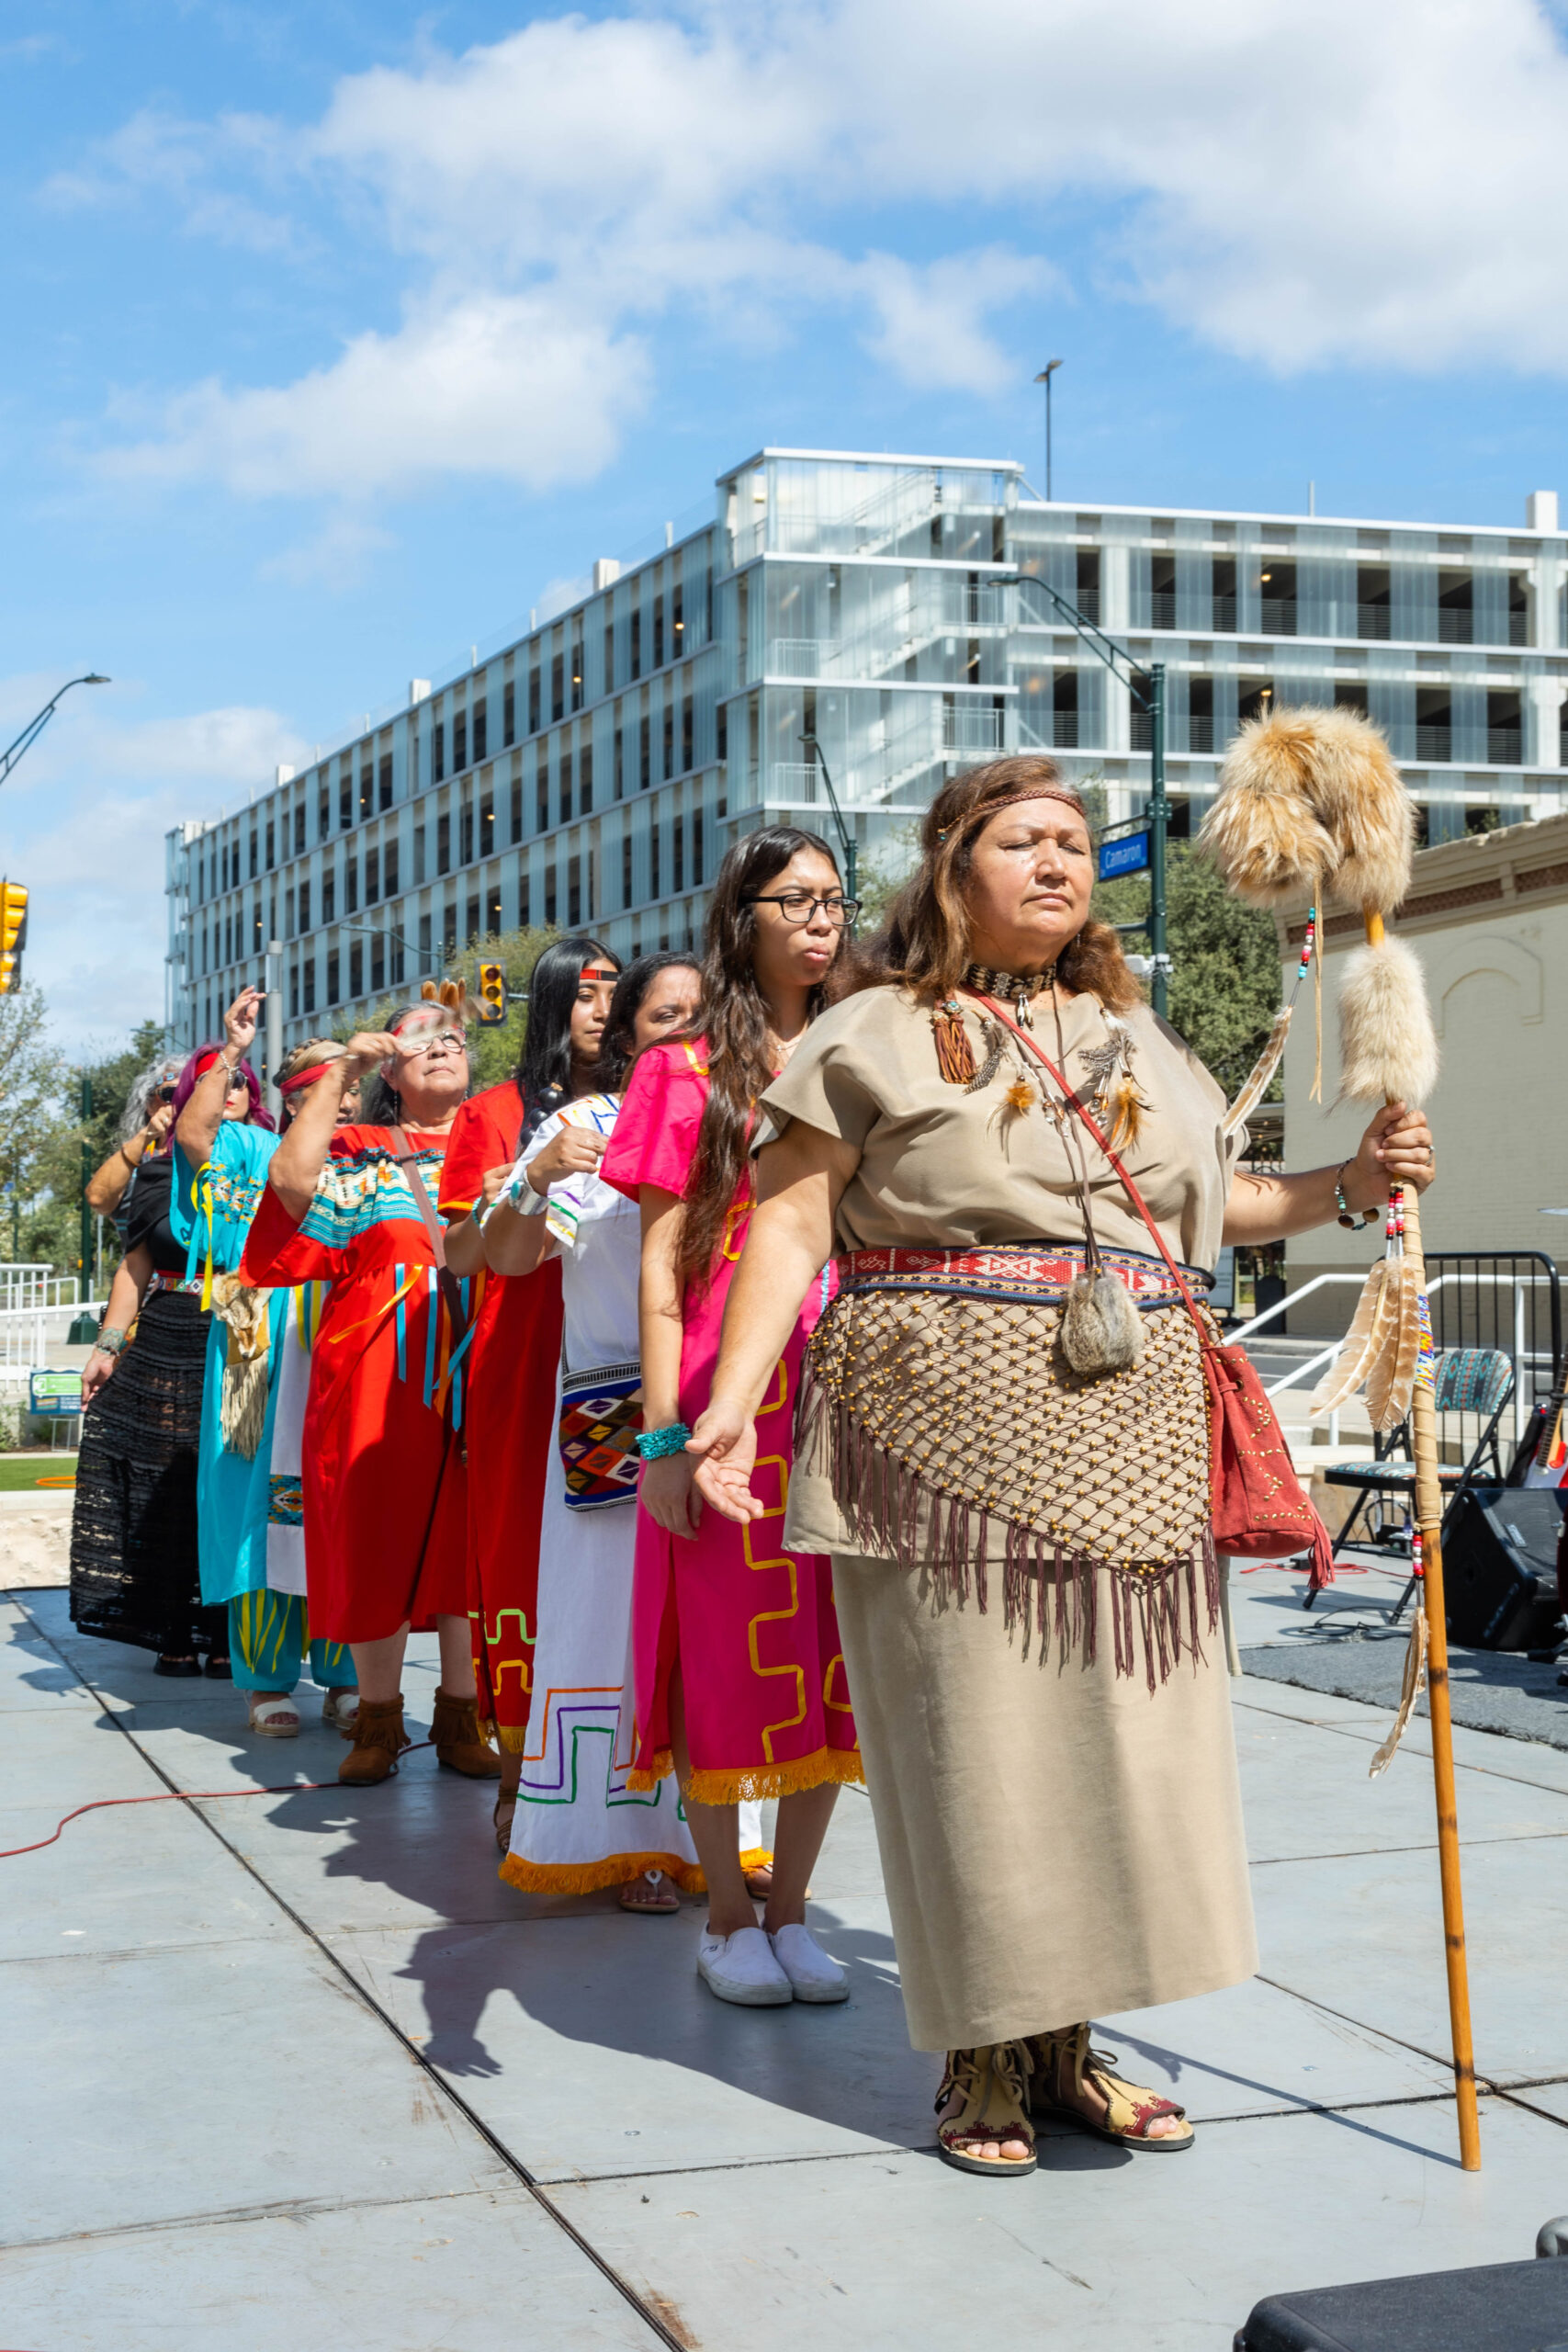 Native American Tribes lead prayer ceremony